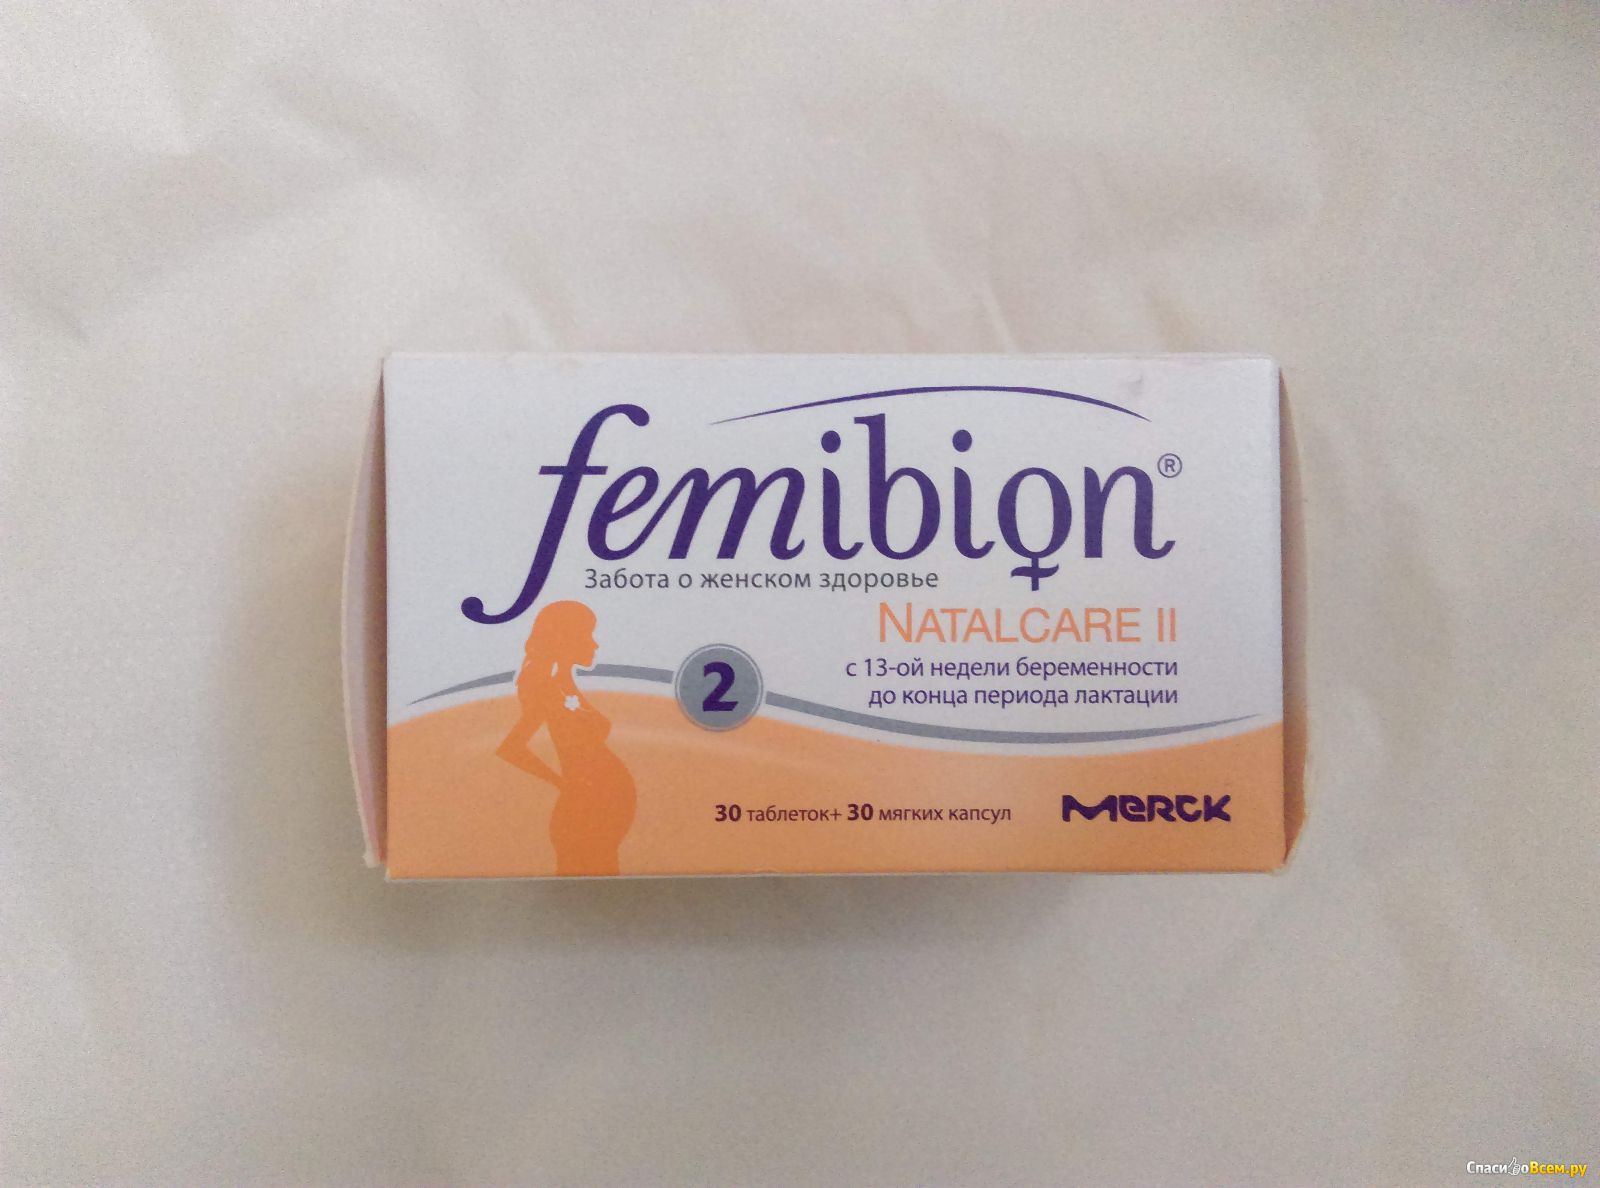 Фемибион 2 аптека. Femibion natalcare 2. Фемибион наталкеа 2 таб + капсулы n30. Фемибион с 13 недели беременности.